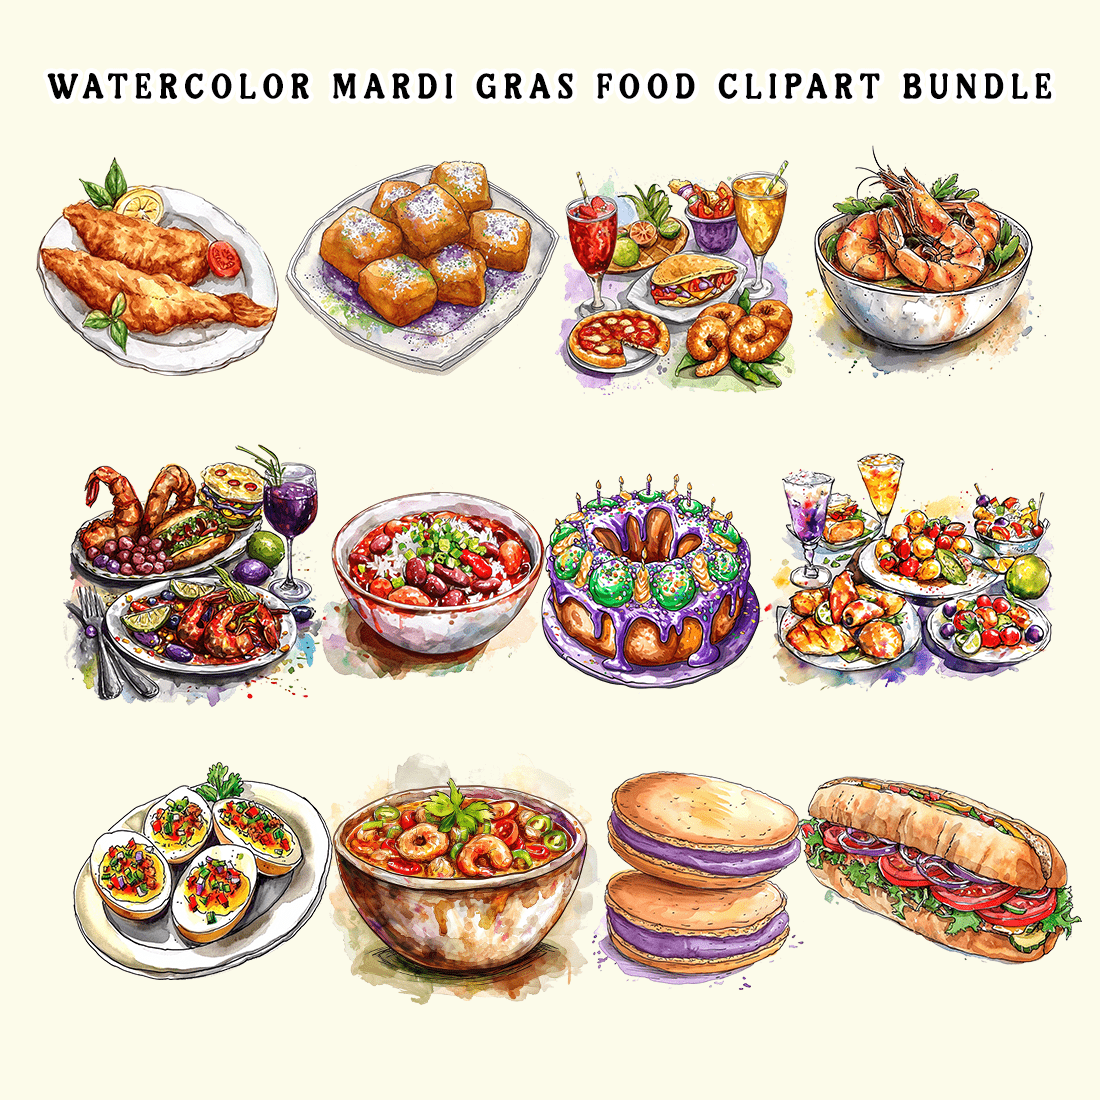 Watercolor Mardi Gras Food Clipart Bundle preview image.